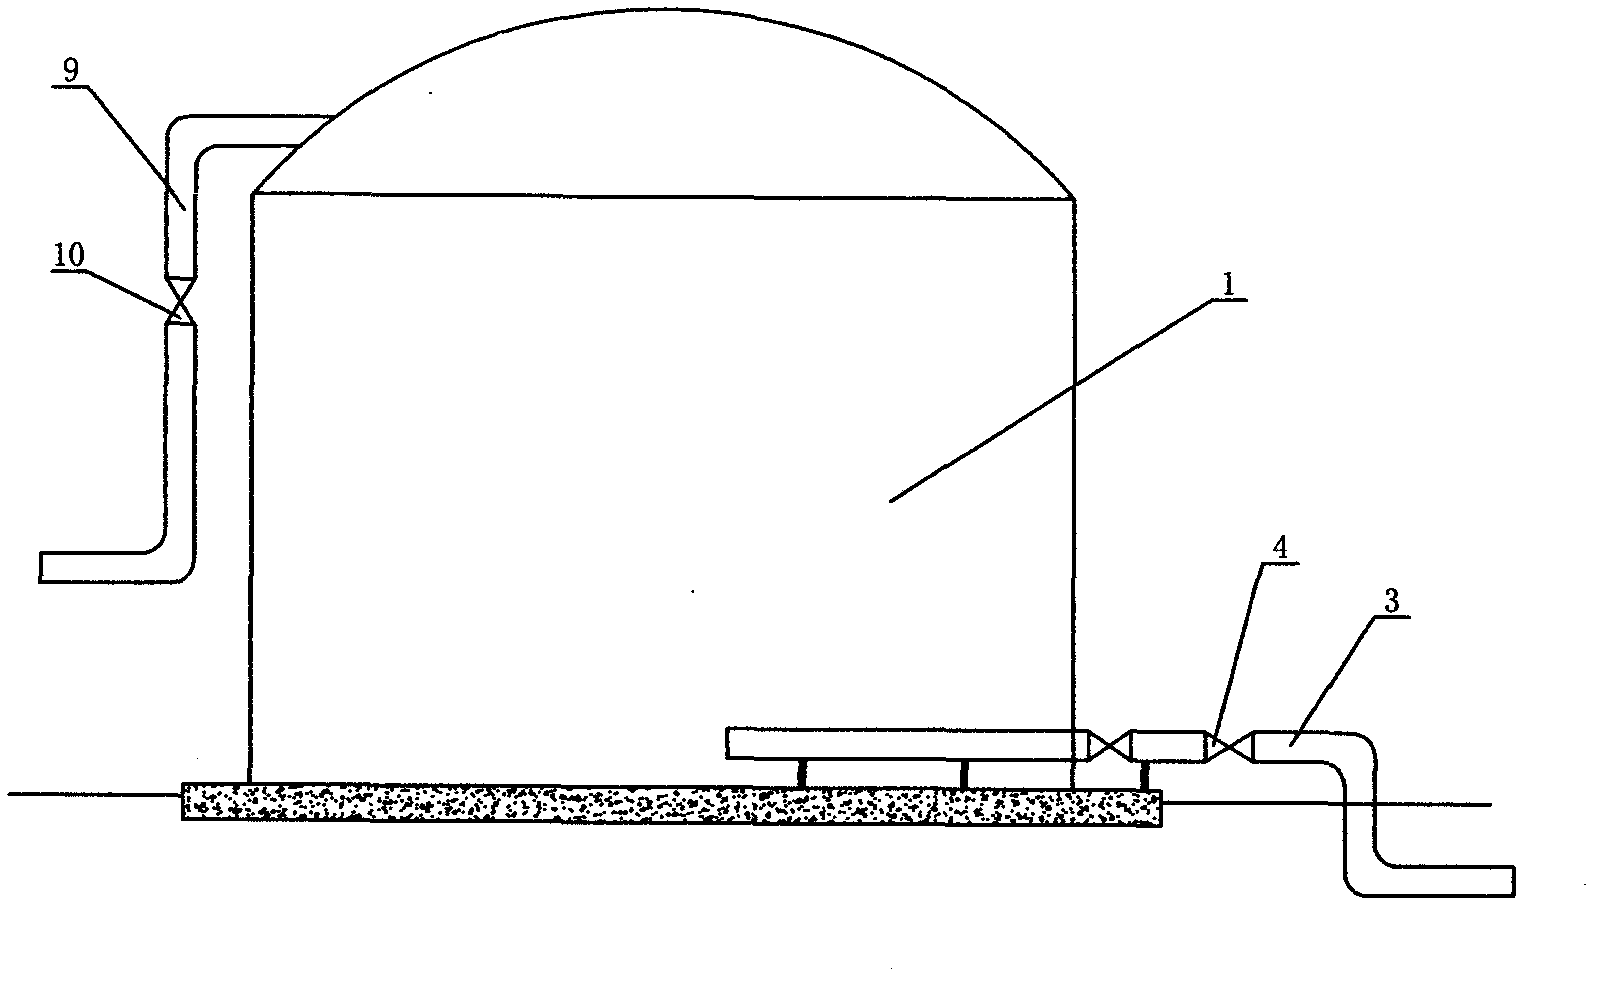 Fermentation tank for biogas engineering